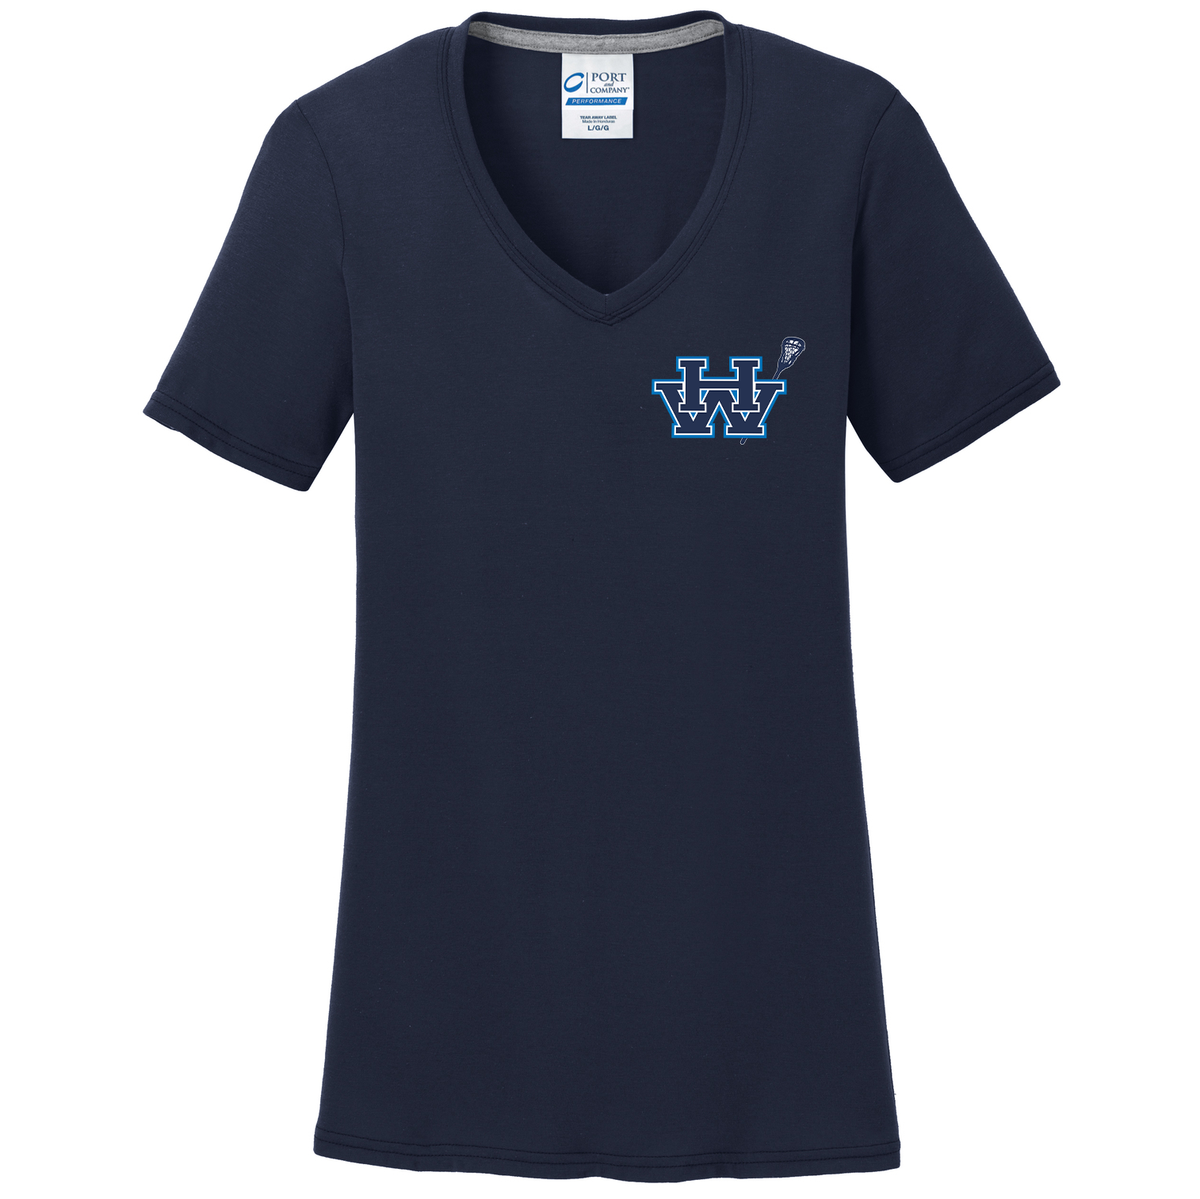 Hamilton Wenham Lacrosse Women's T-Shirt